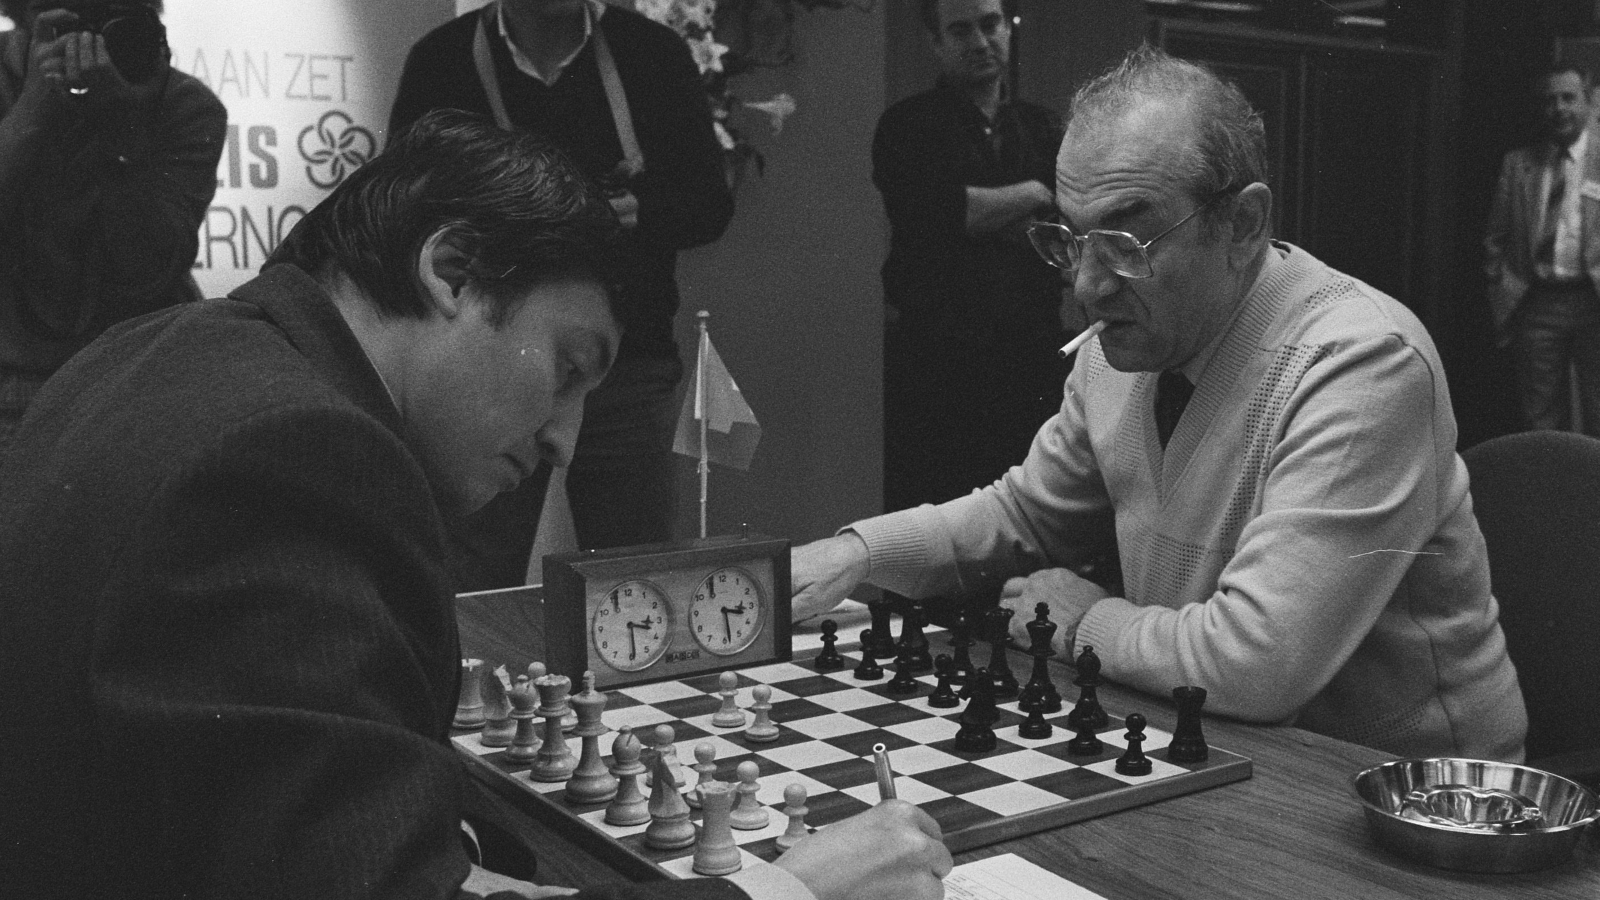 История чемпионов по шахматам. Карпов Корчной 1978. Корчной Карпов Багио 1978.